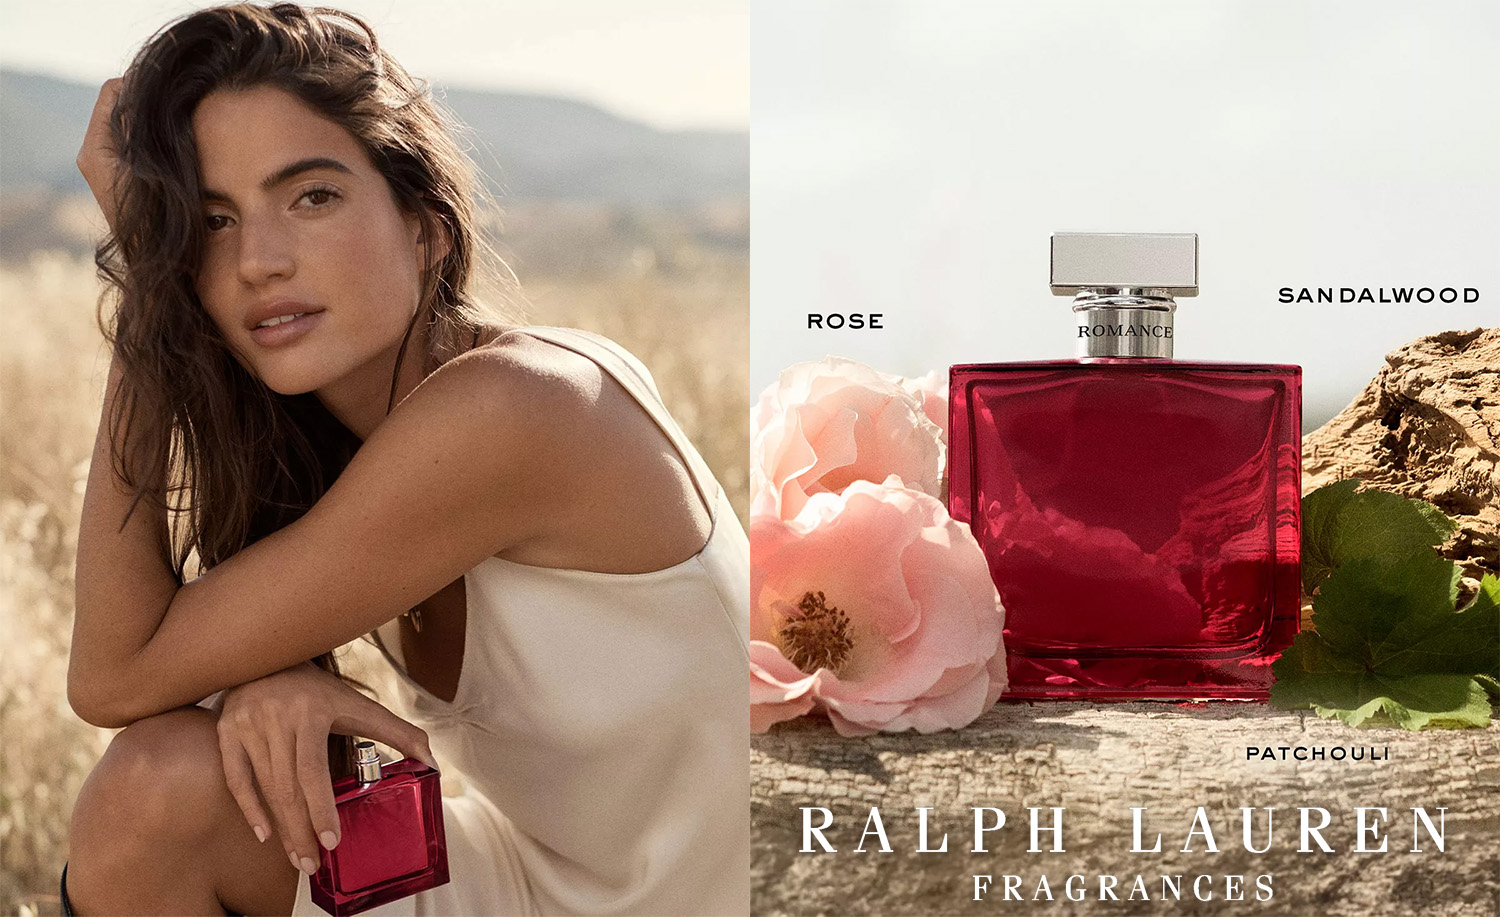 Ralph Lauren Romance Eau de Parfum Intense perfume notes